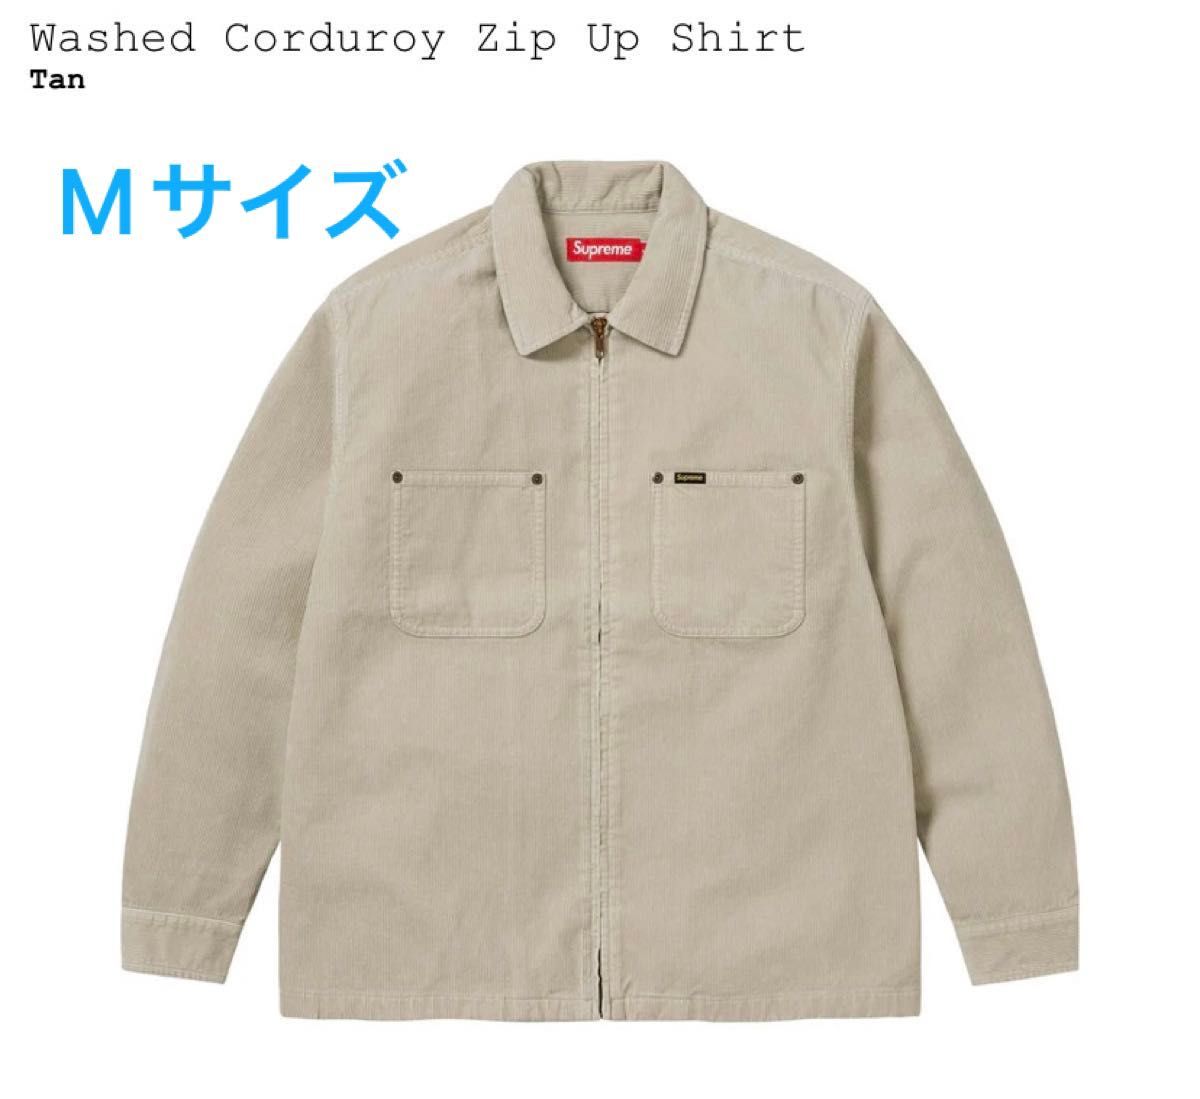 Supreme Washed Corduroy Zip Up Shirt Tan